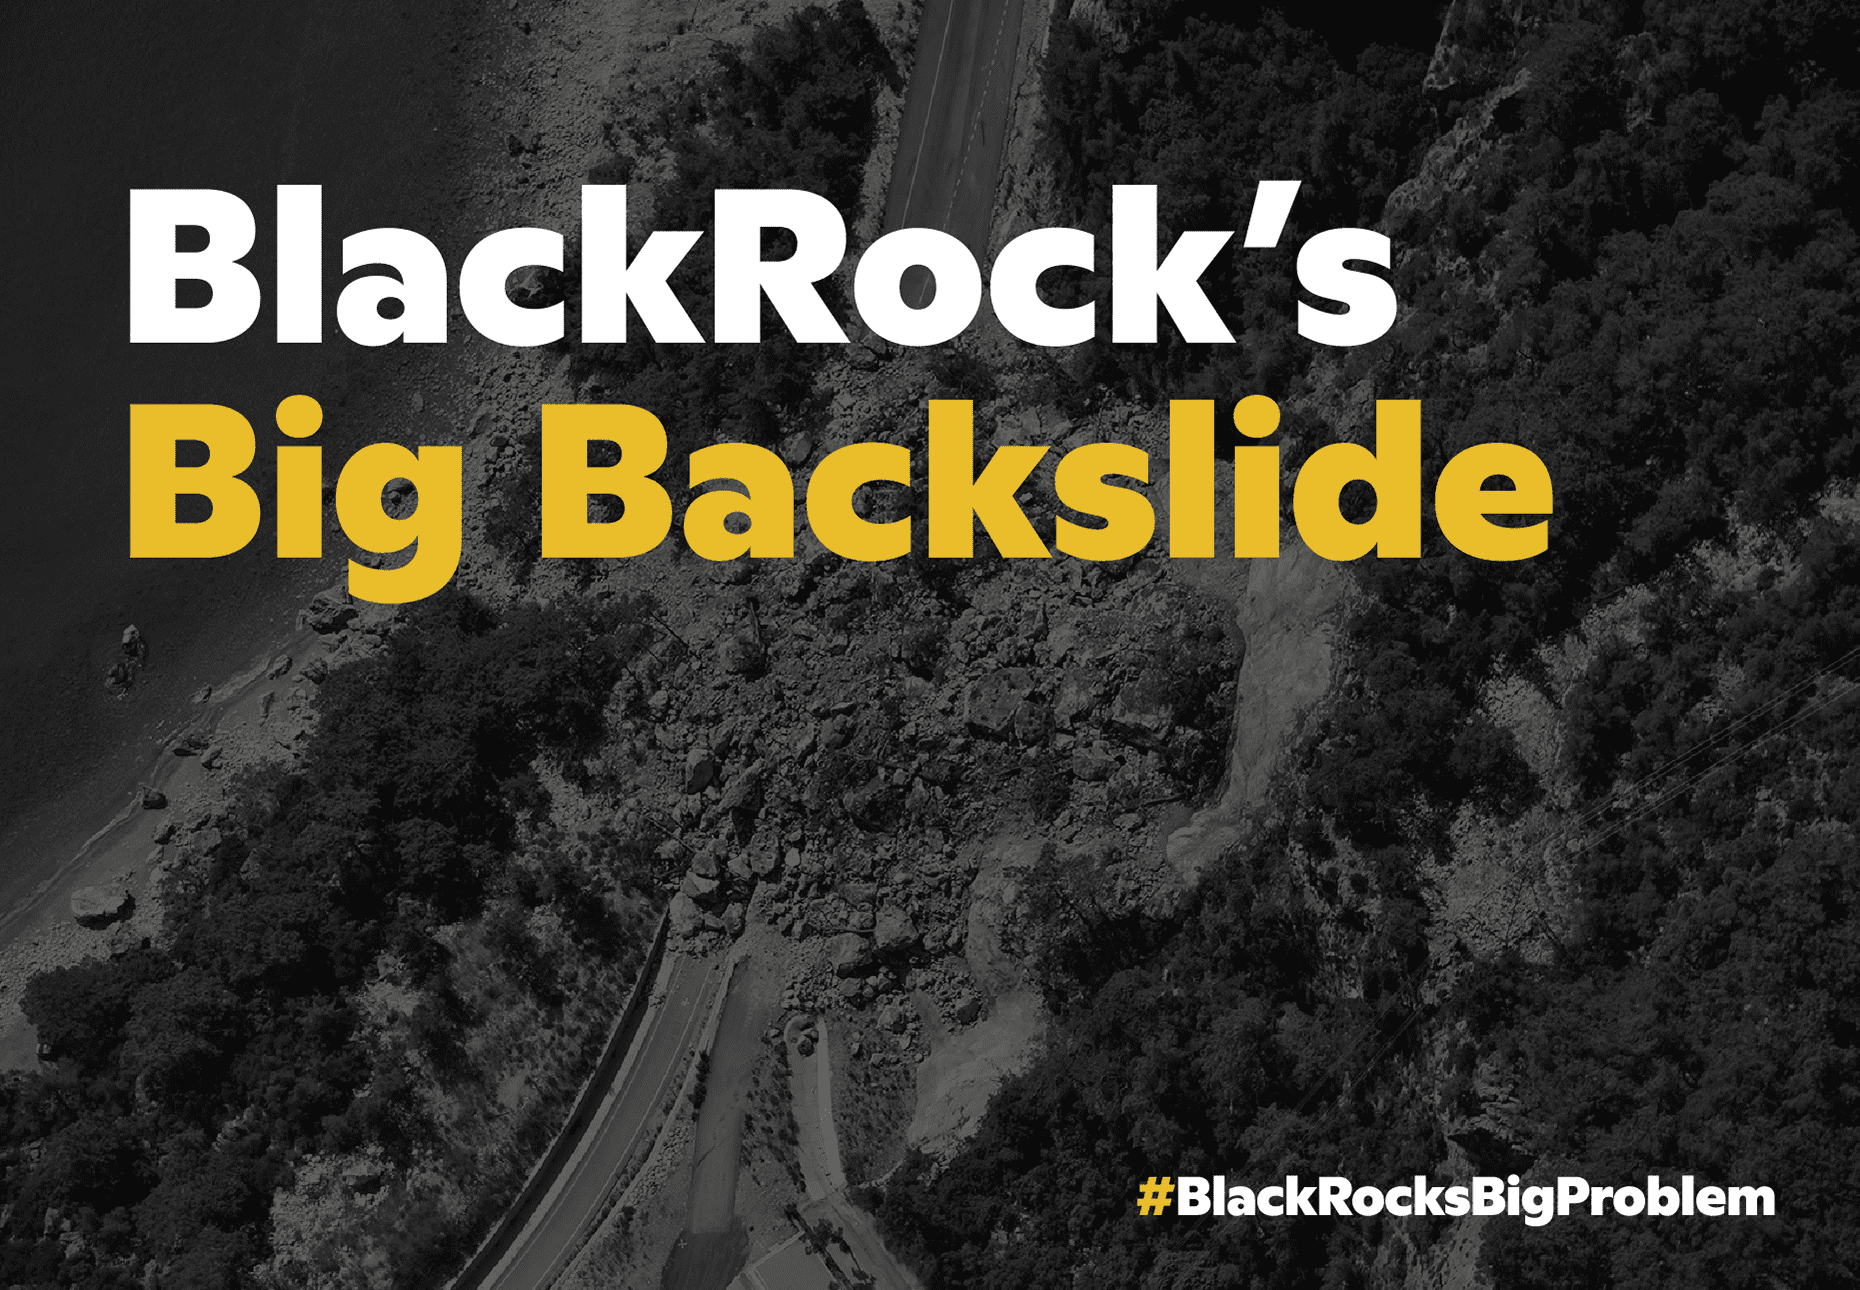 A black and white image of a rockslide over a coastal road with the words BlackRock's Big Backslide overlaid.